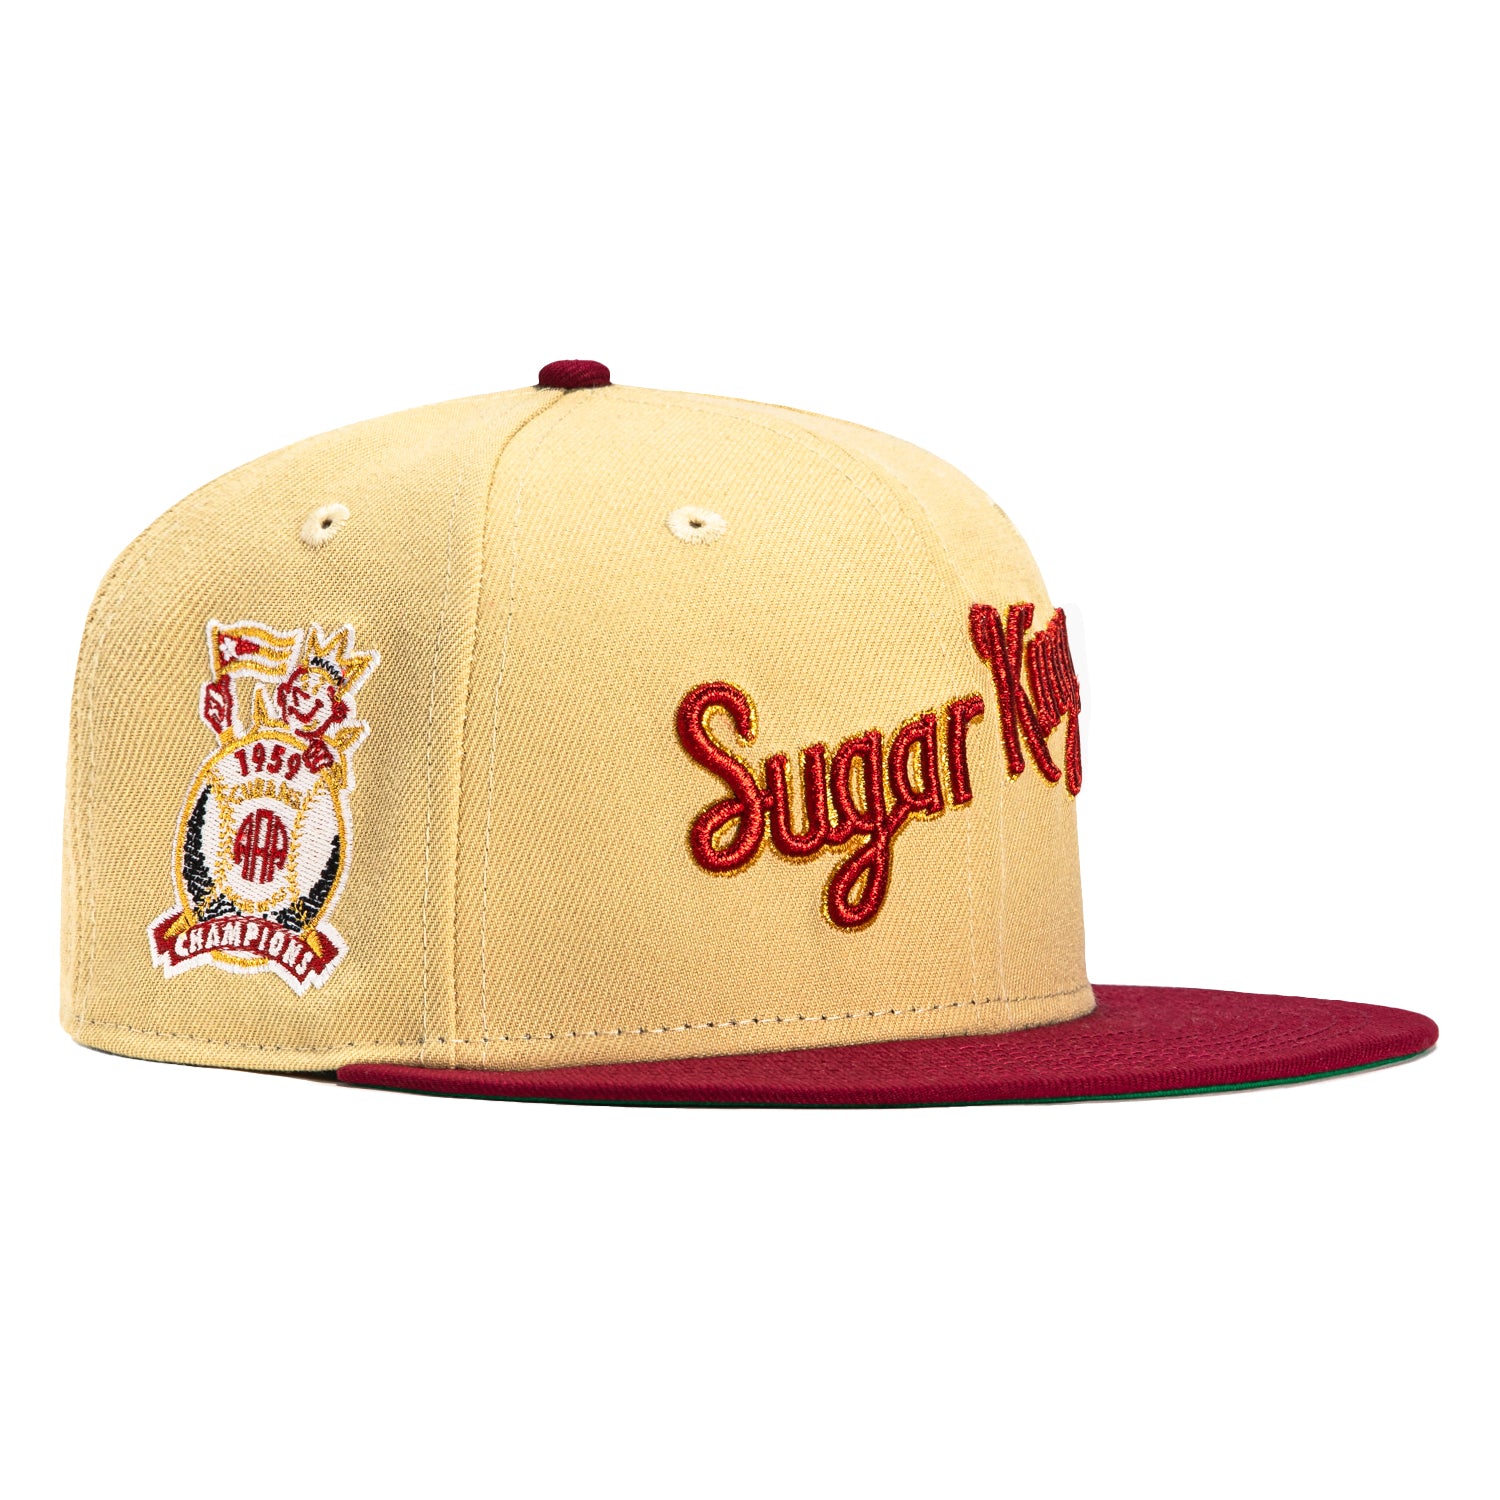 Havana Sugar Kings Baseball Apparel Store